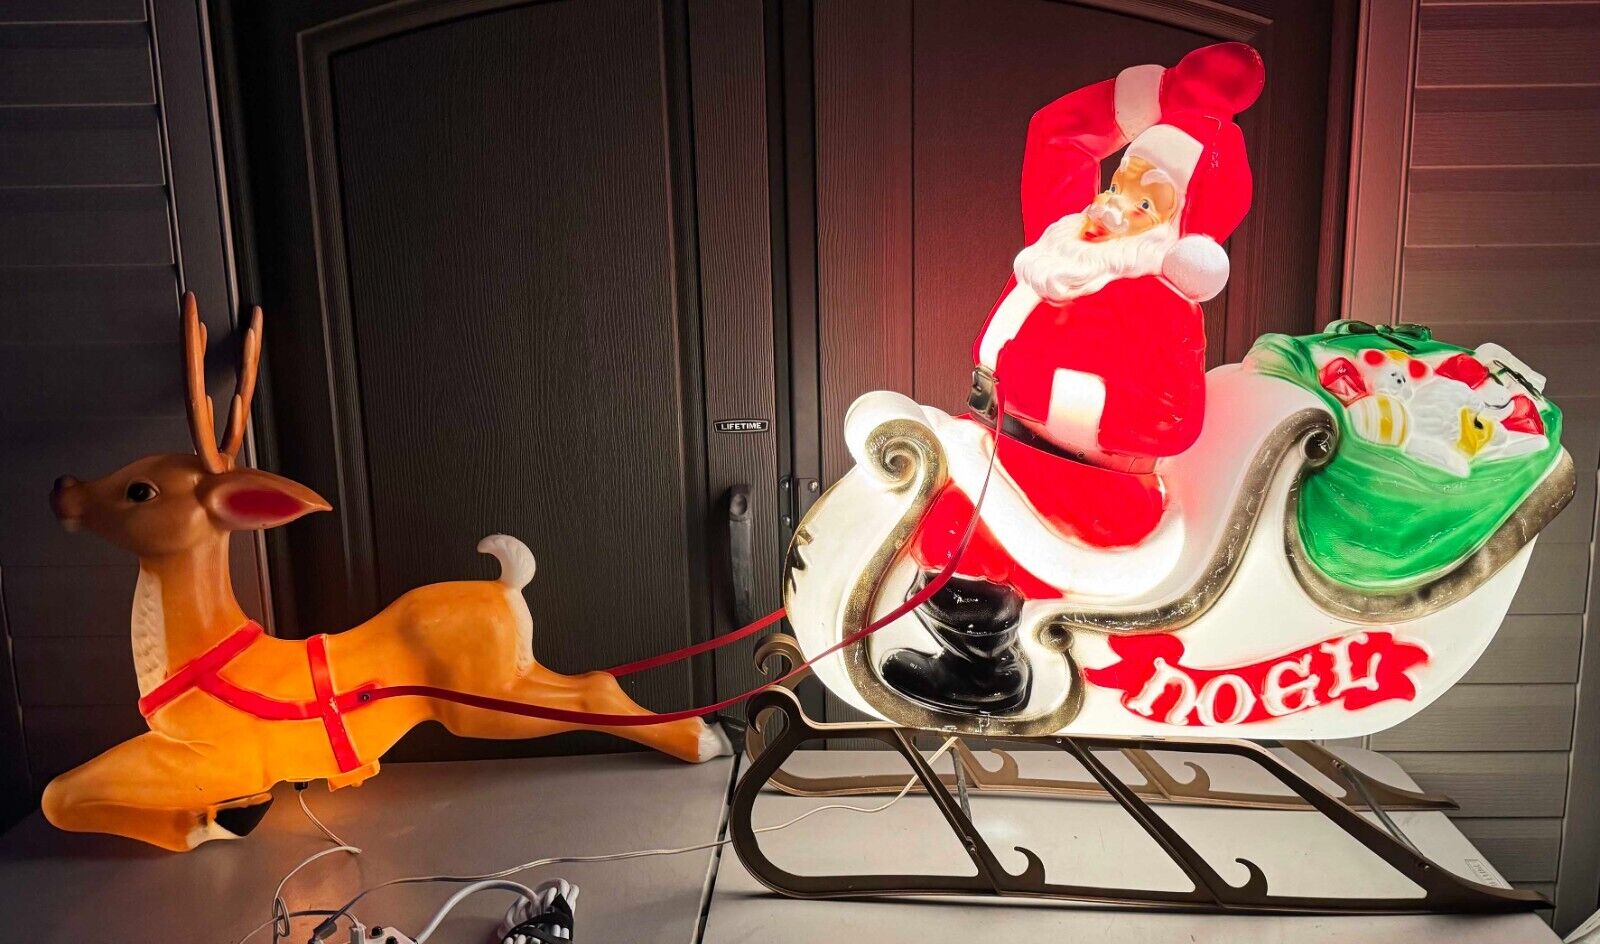 Vintage Empire Santa Claus Sleigh Blow Mold Reindeer lawn huge display rare